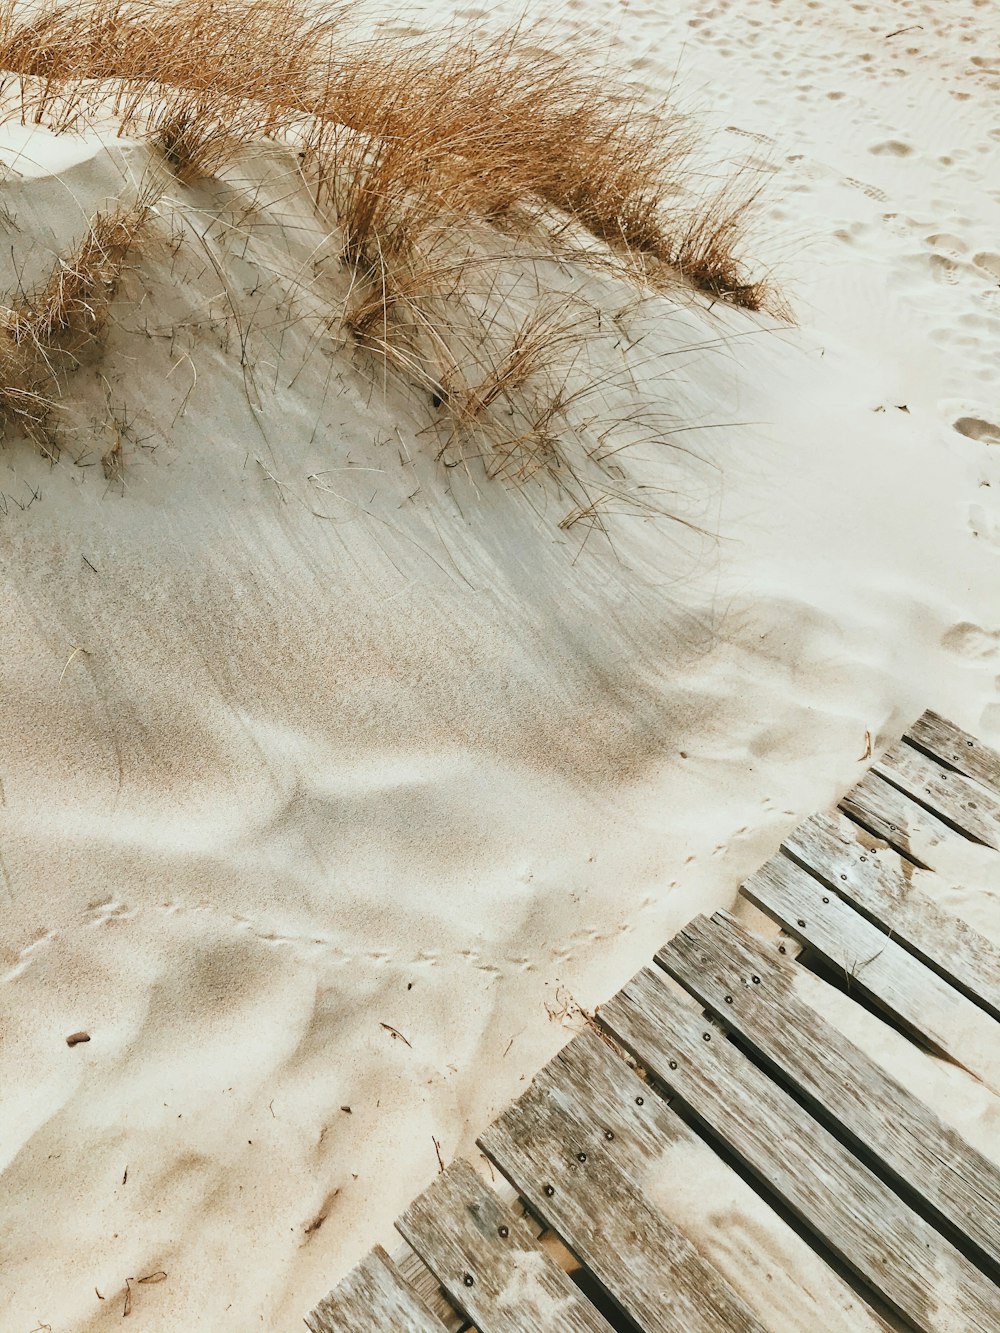 valla de madera marrón sobre arena blanca